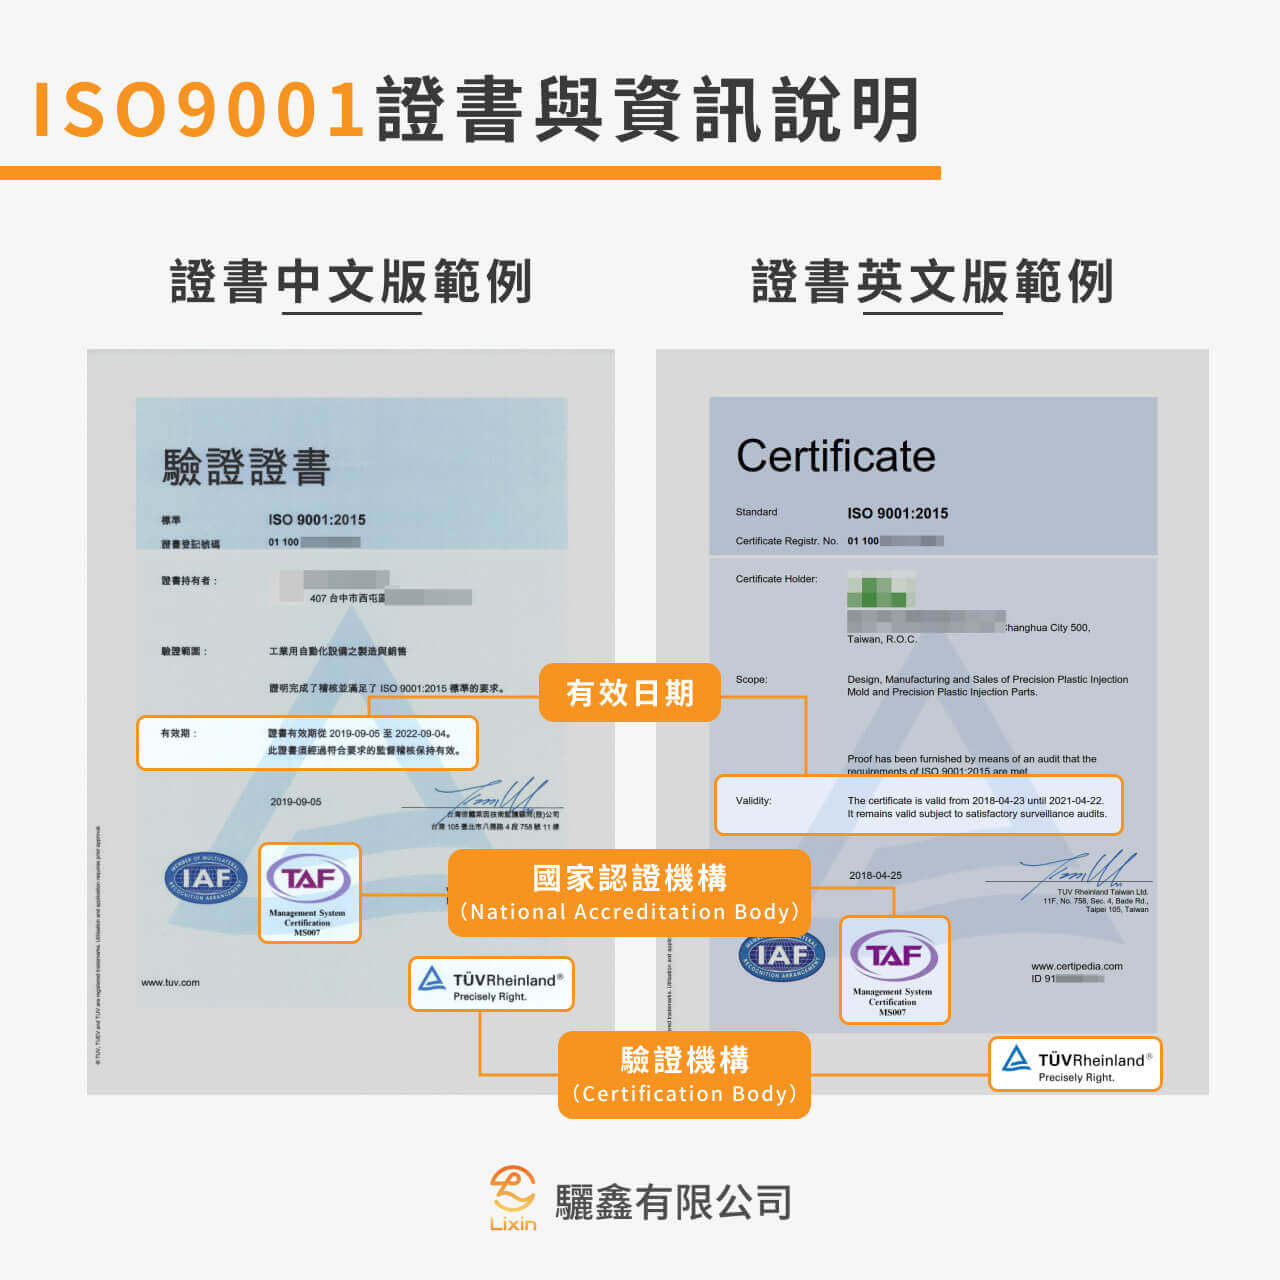 ISO9001證書與資訊說明